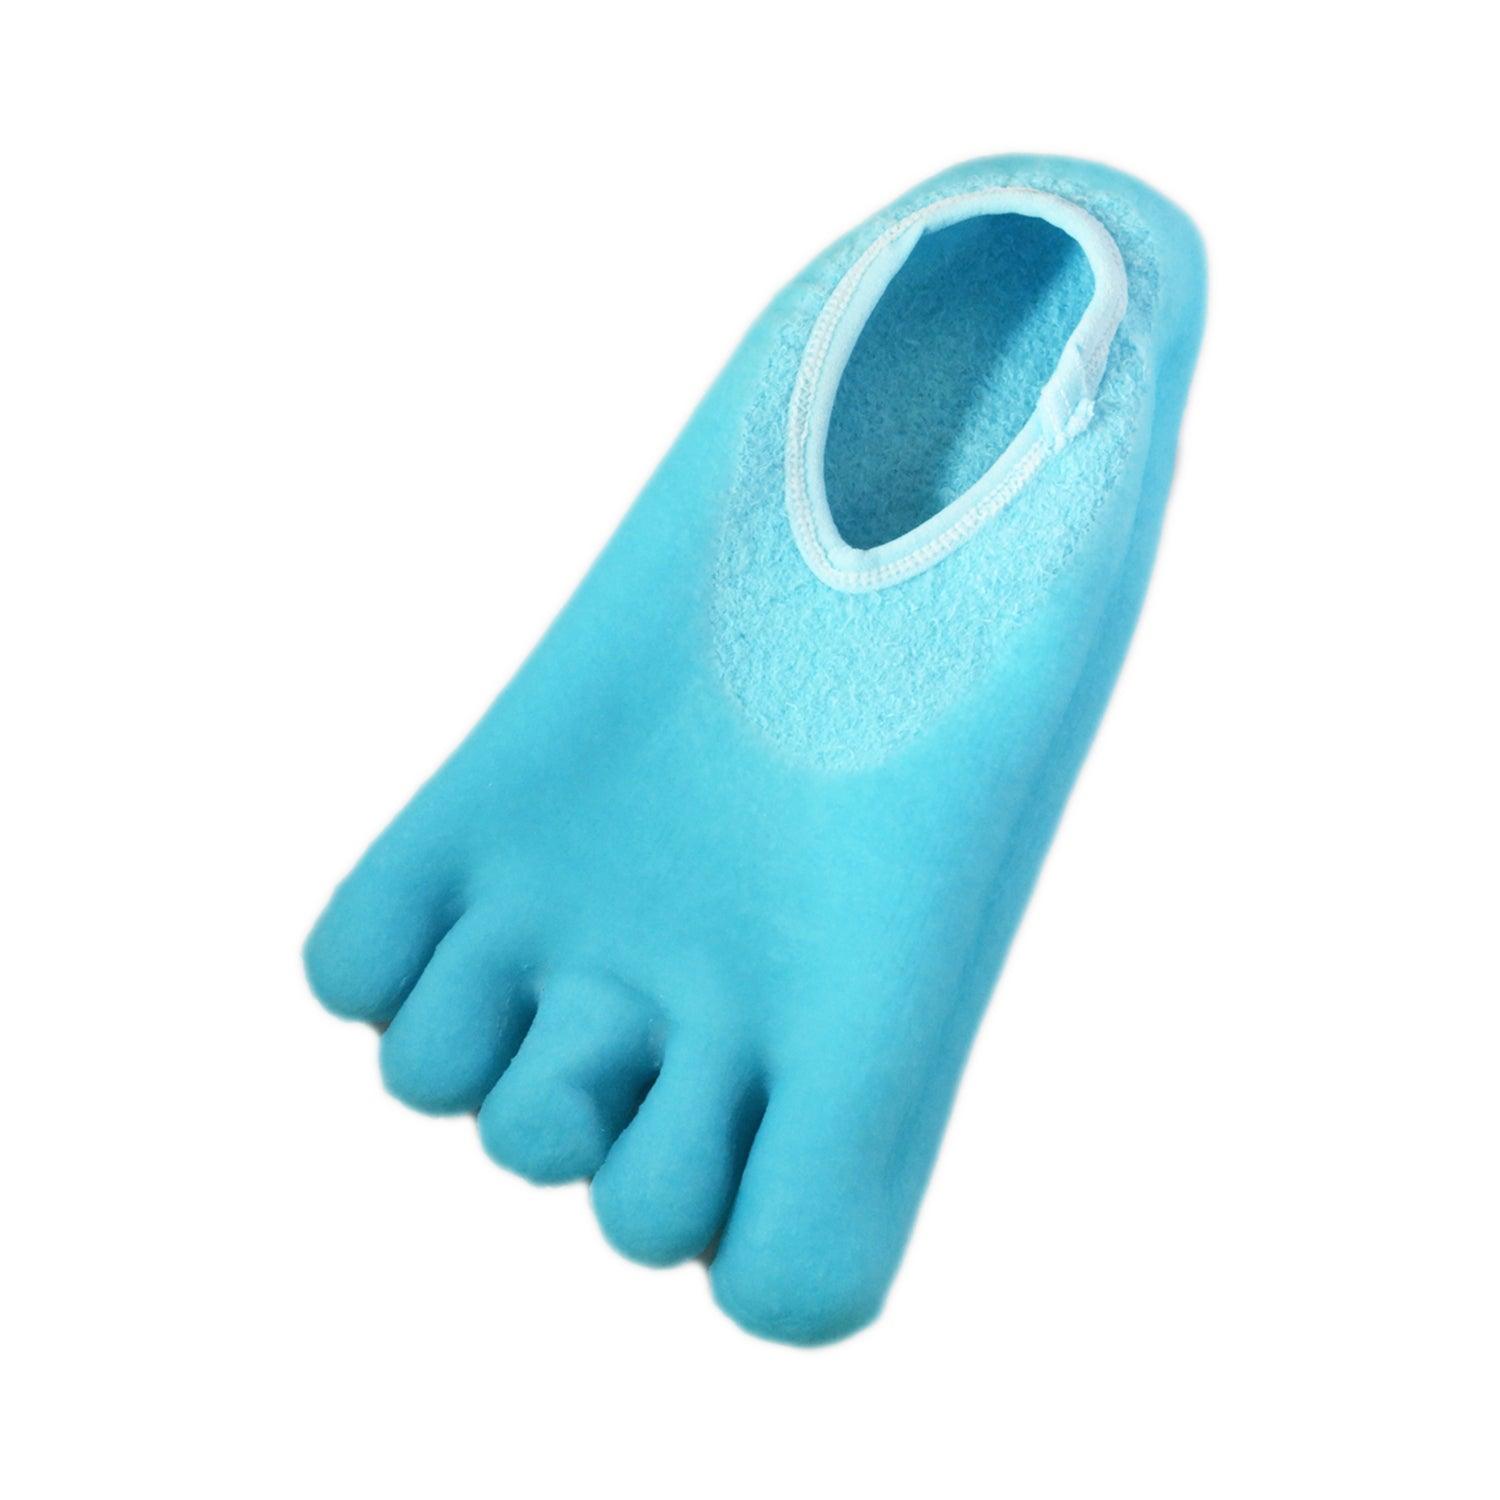 Moisturizing Socks with gel lining